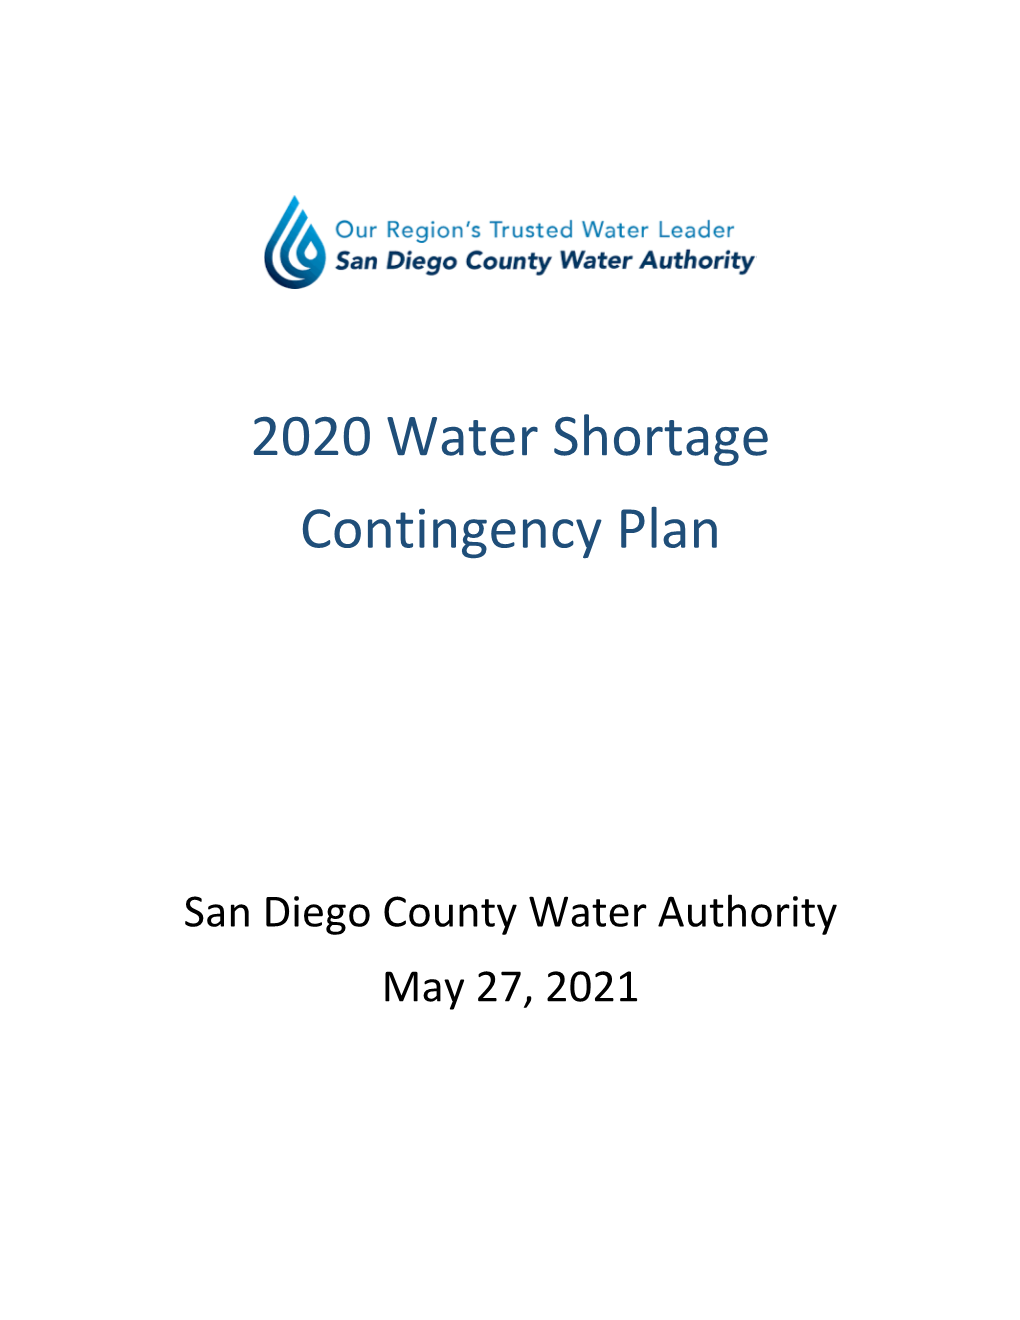 Water Shortage Contingency Plan